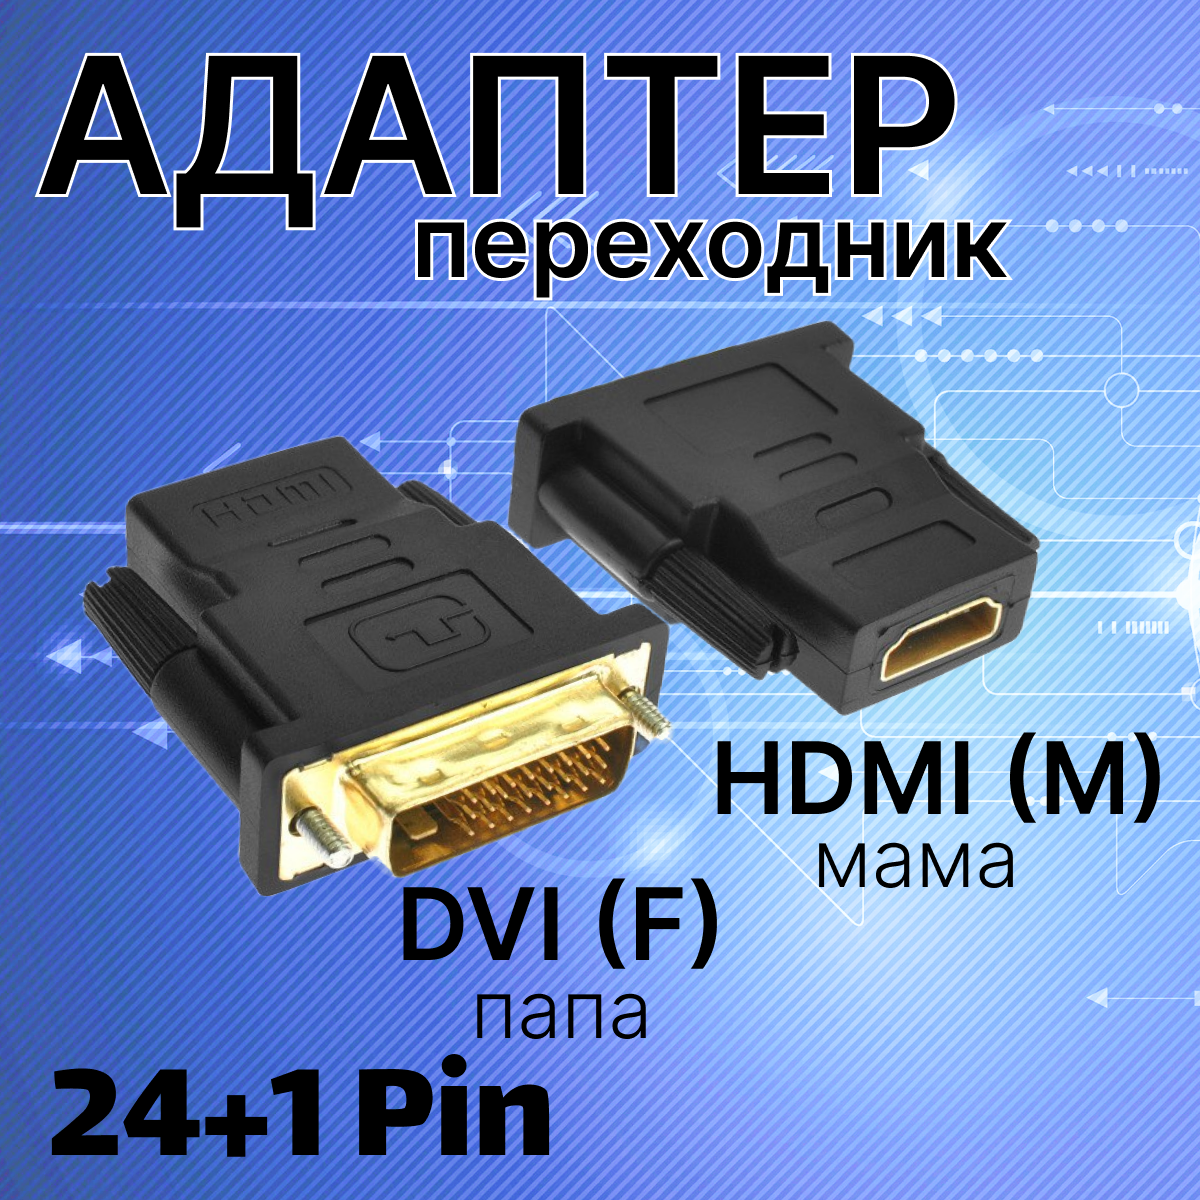 Переходник адаптер dvi i 24+1 (F) папа на hdmi (M) мама, Конвертер HDMI - DVI